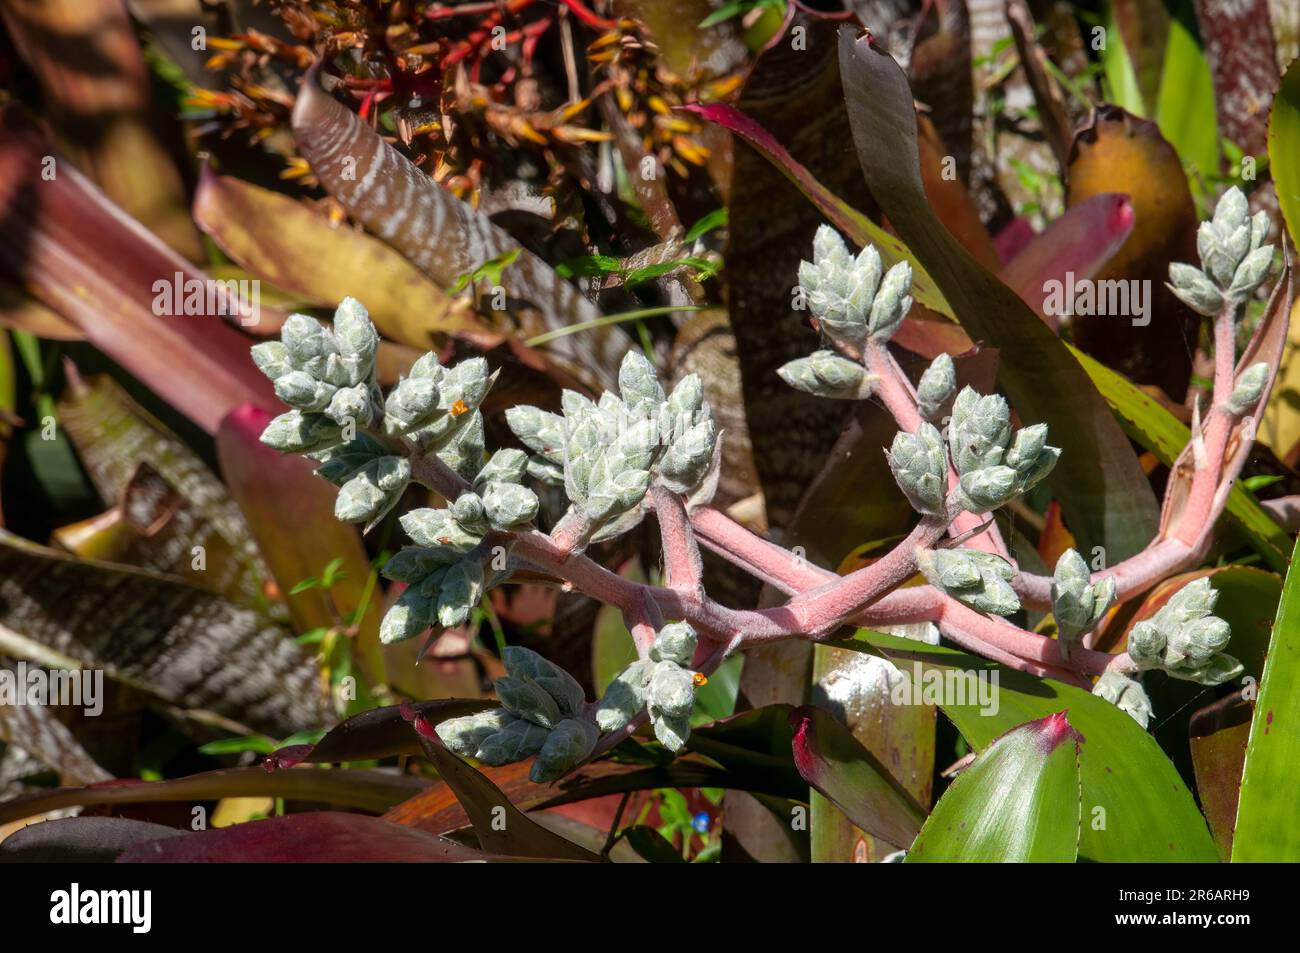 Sydney Australia, flower stem of a hohenbergia lanata bromeliad Stock Photo